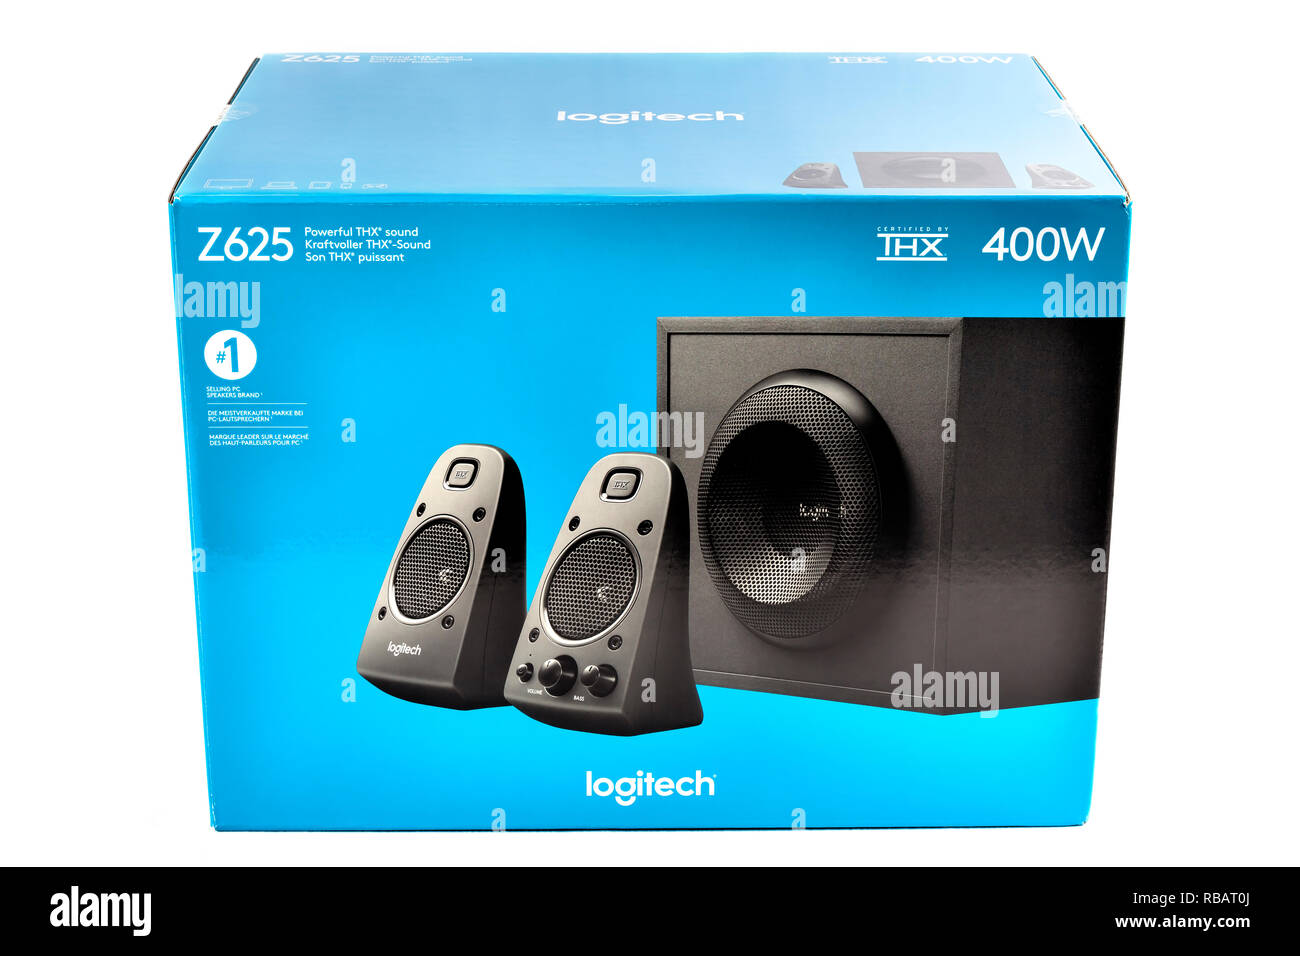 New speaker system 2.1 Logitech brand and model Z625 400W power and THX  technology. Photo taken on January 8, 2019 in Spain Stock Photo - Alamy